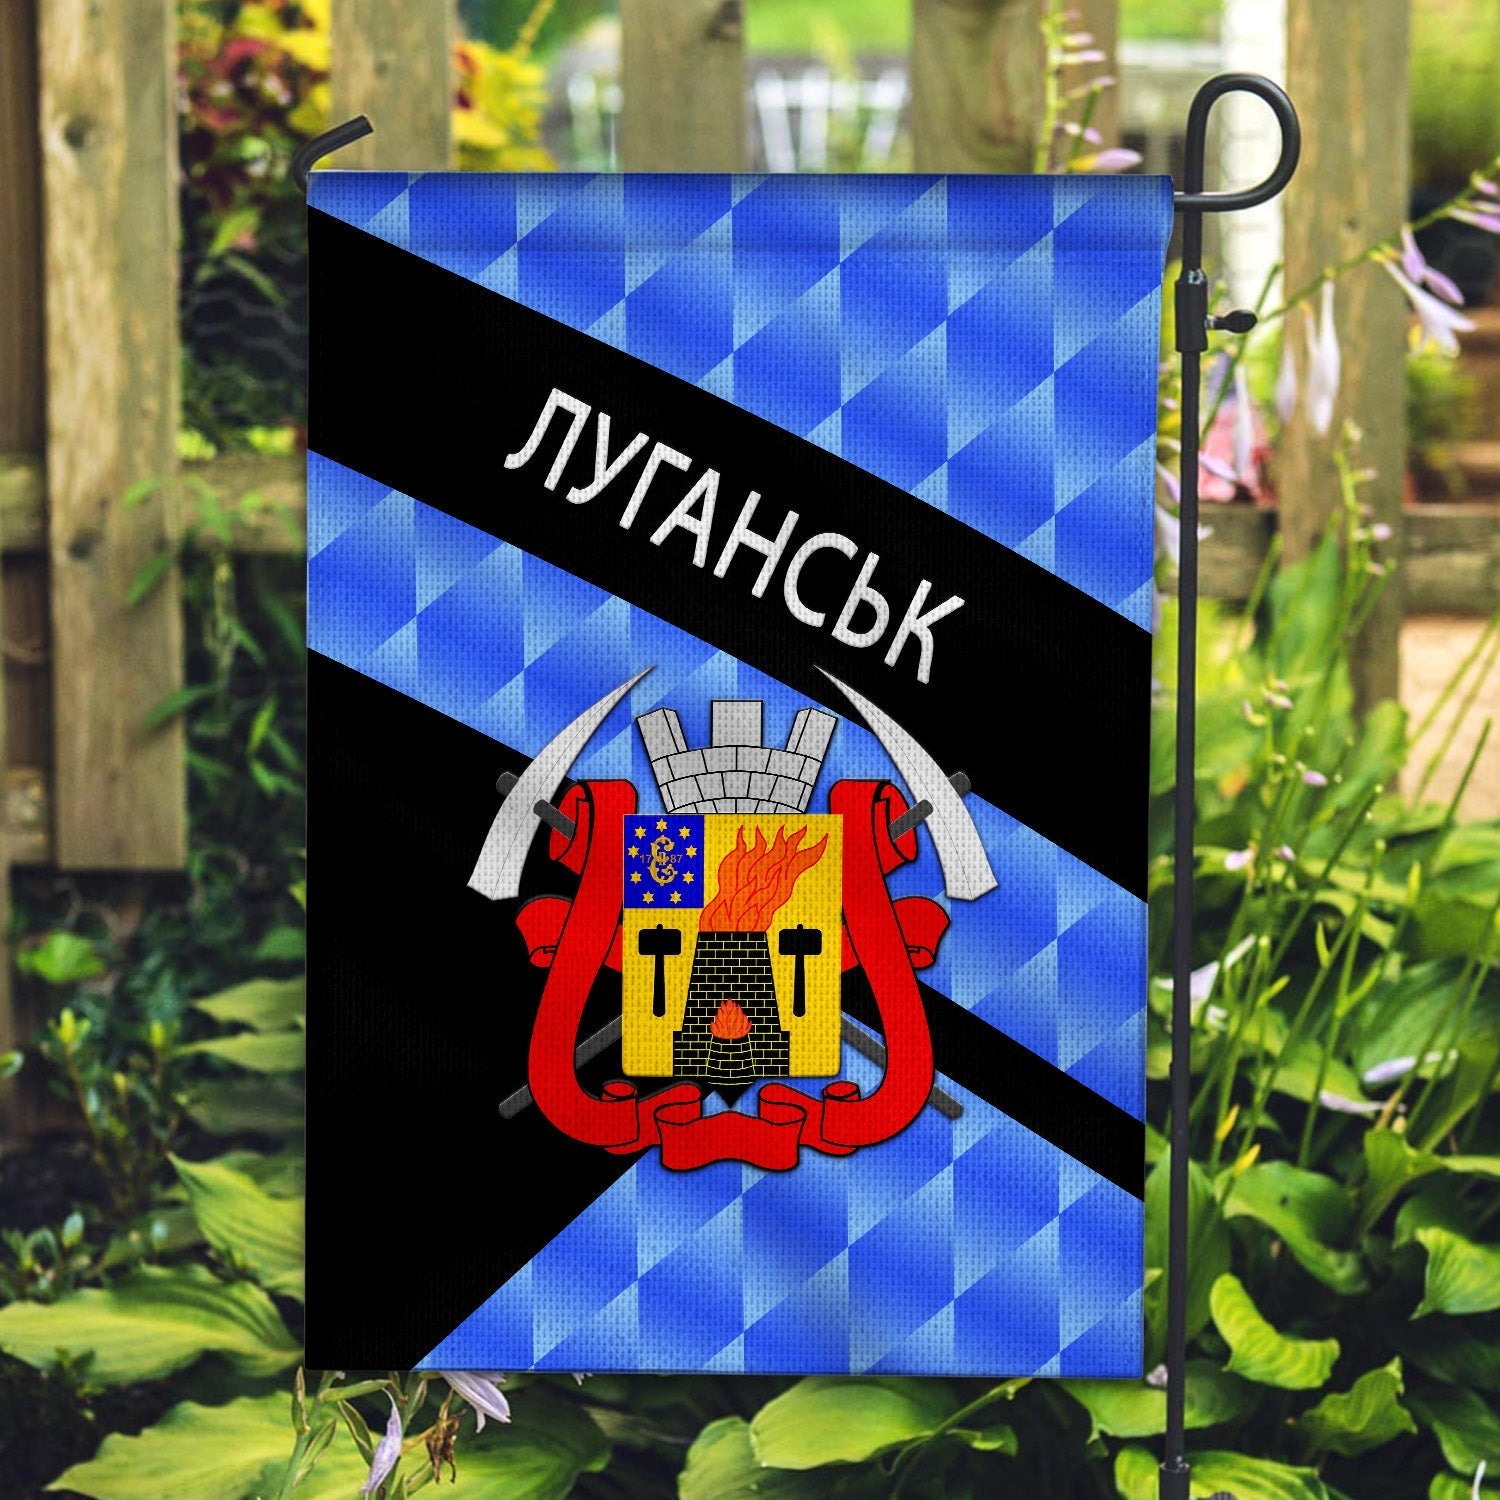 ukraine-luhansk-garden-flag-and-house-flag-sporty-style